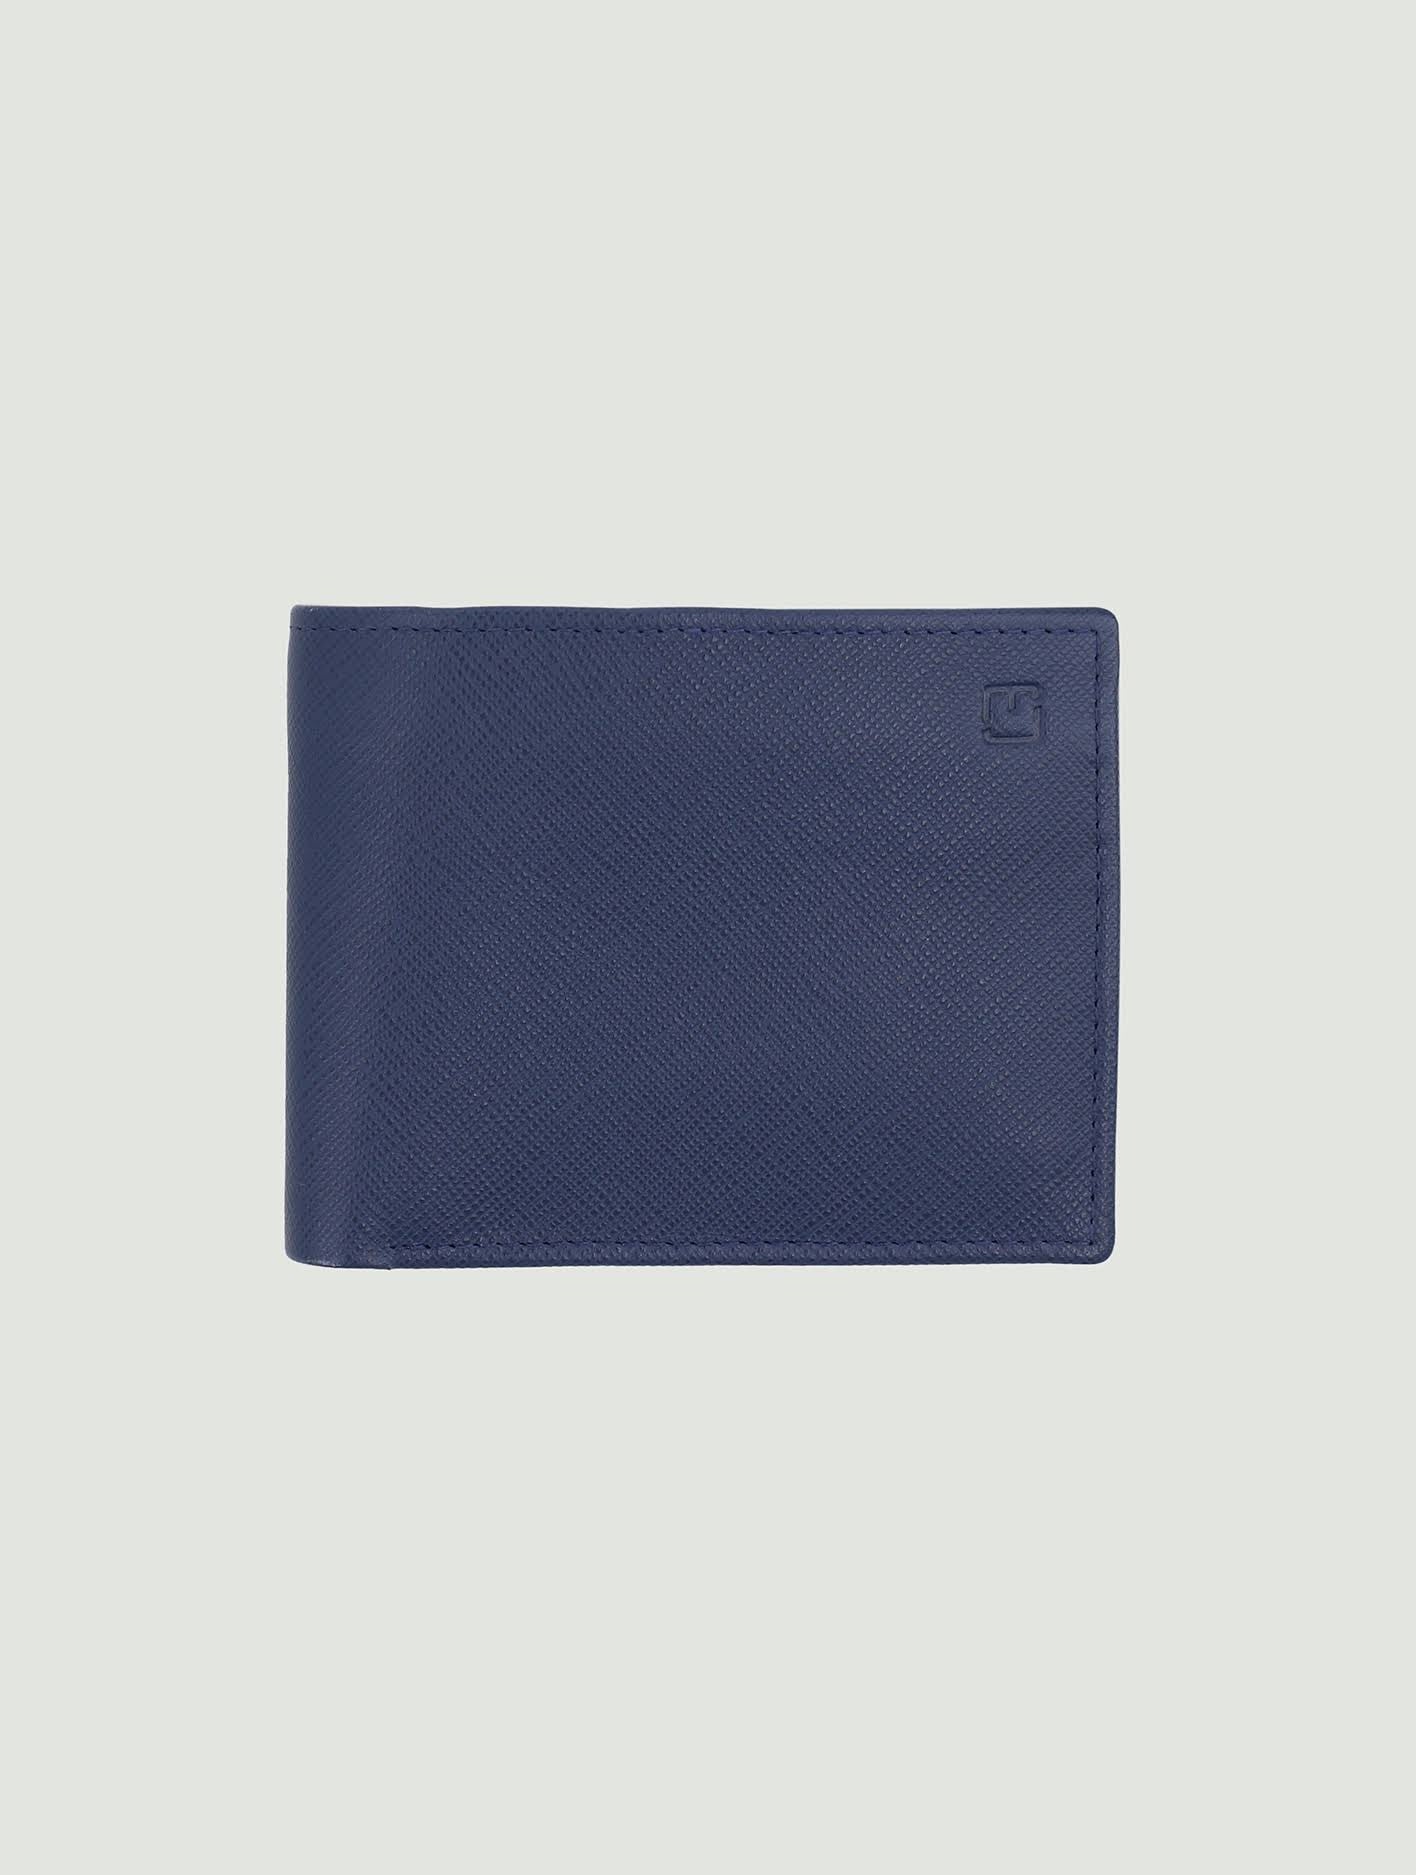 Blue Leather Tri-fold Card holder Wallet